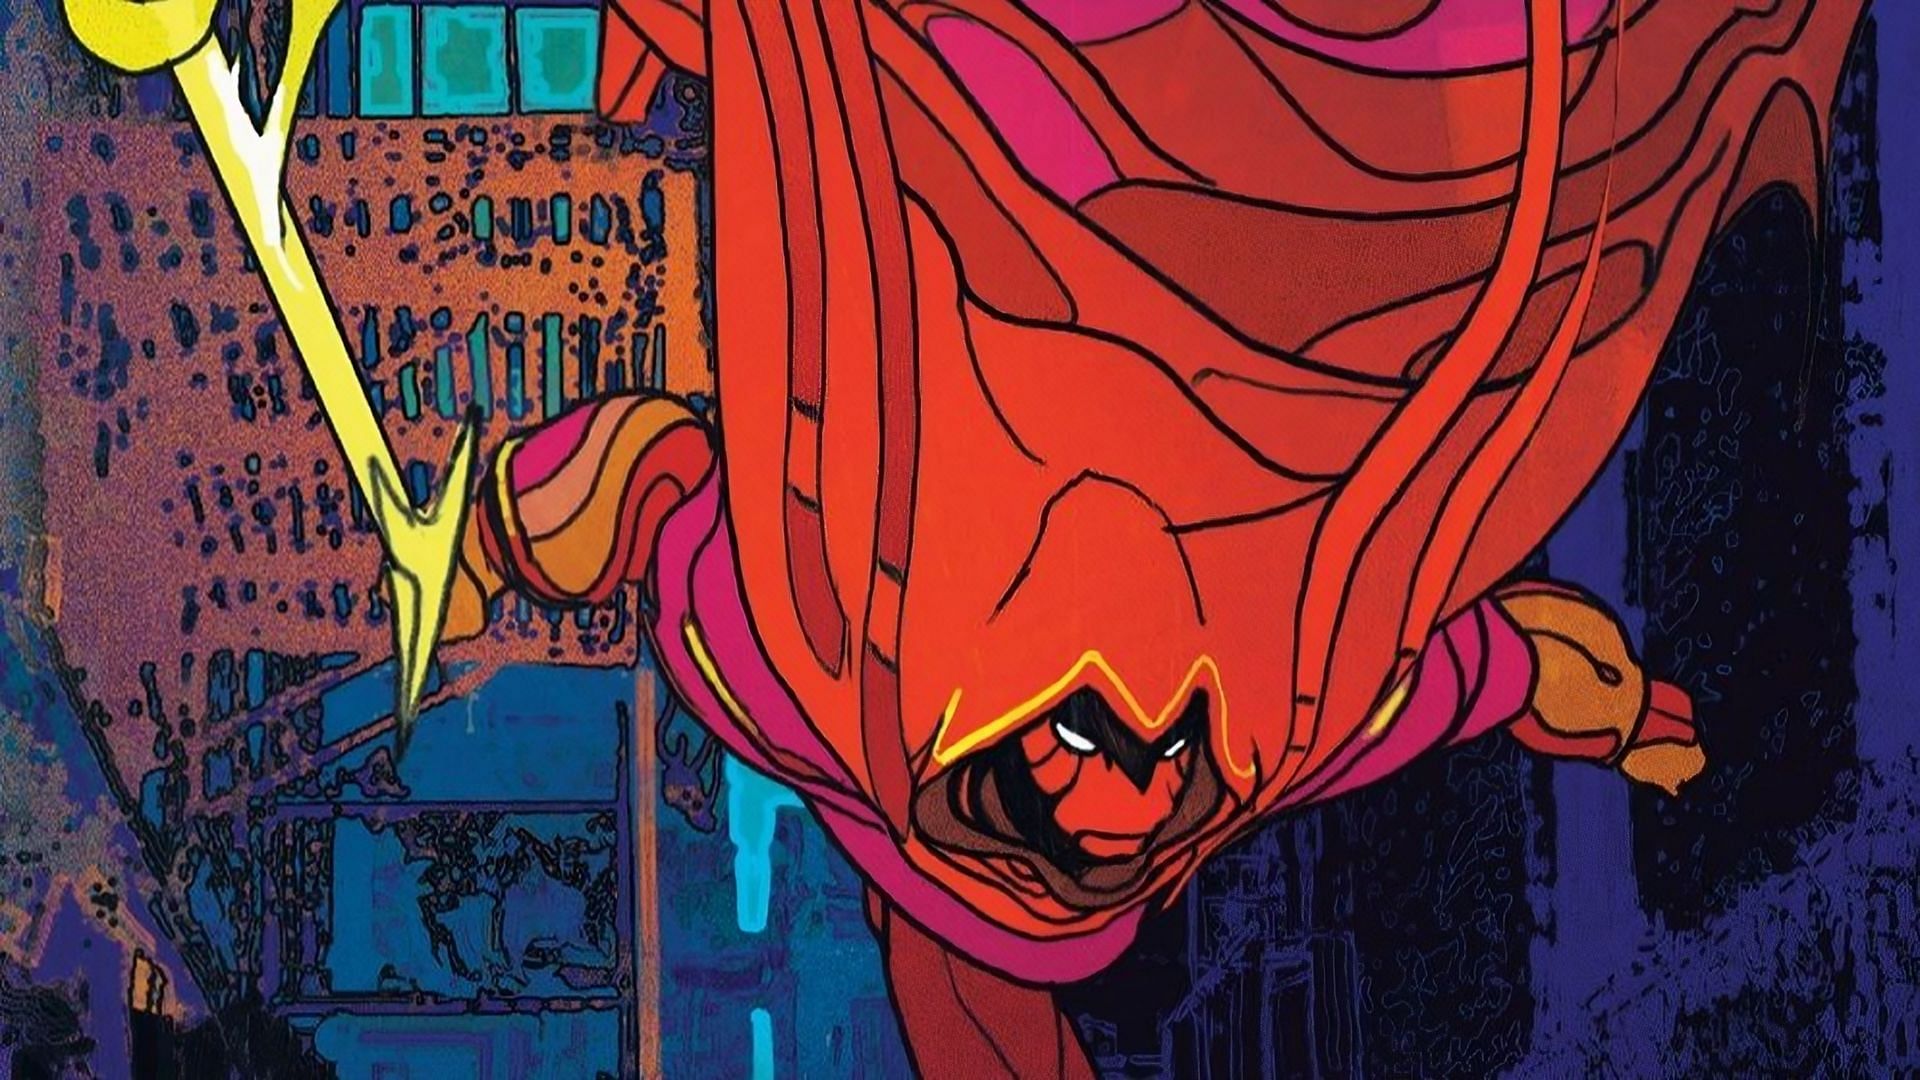 Cover of the comic (Image via DC Comics)